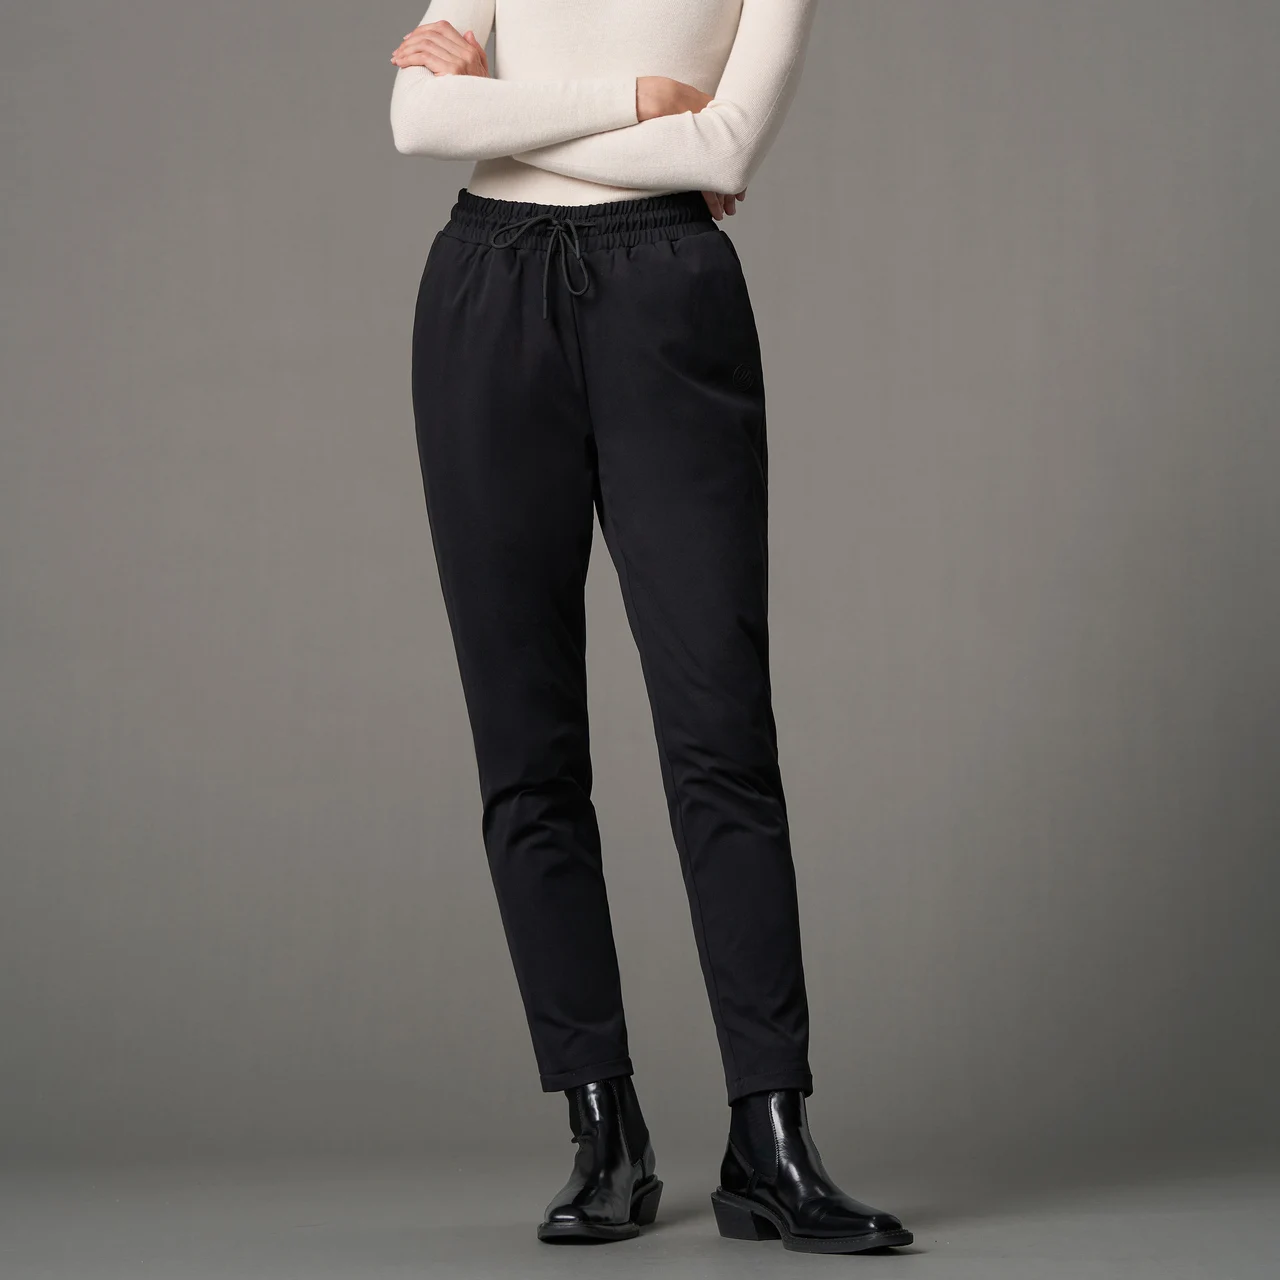 Bosideng Women's 2021 New Slim and Versatile Fit Elastic High Waist Warm and Windproof Down Pants B10147102